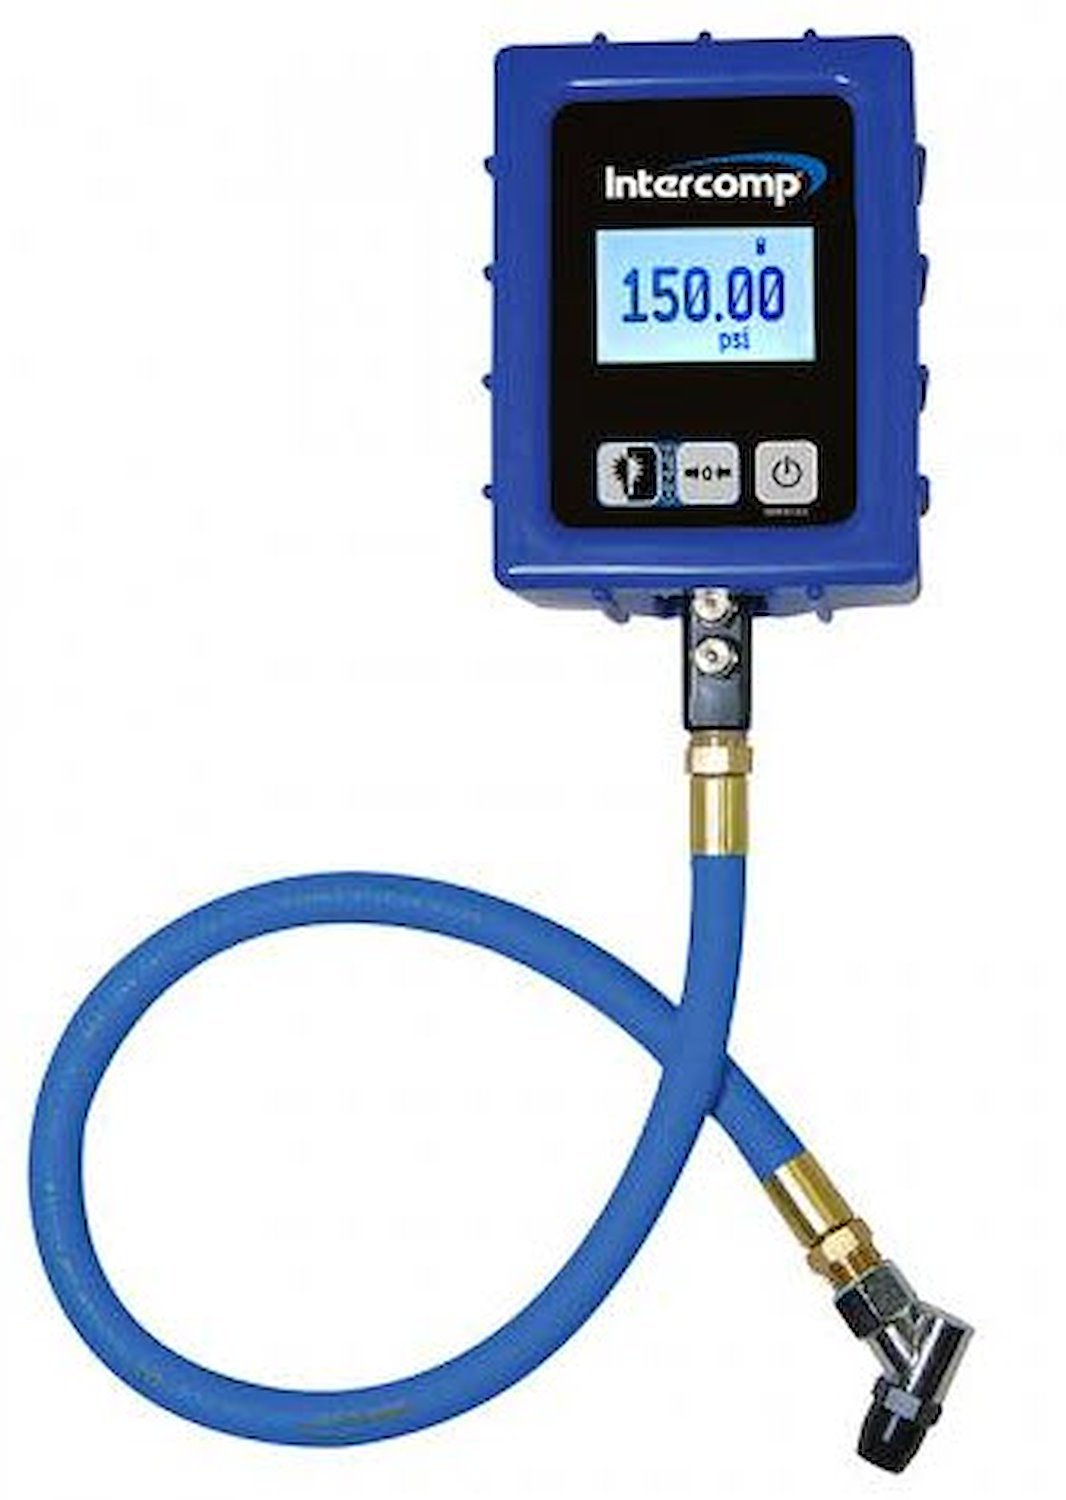 360049 Digital Air Pressure Gauge [0-150 psi]